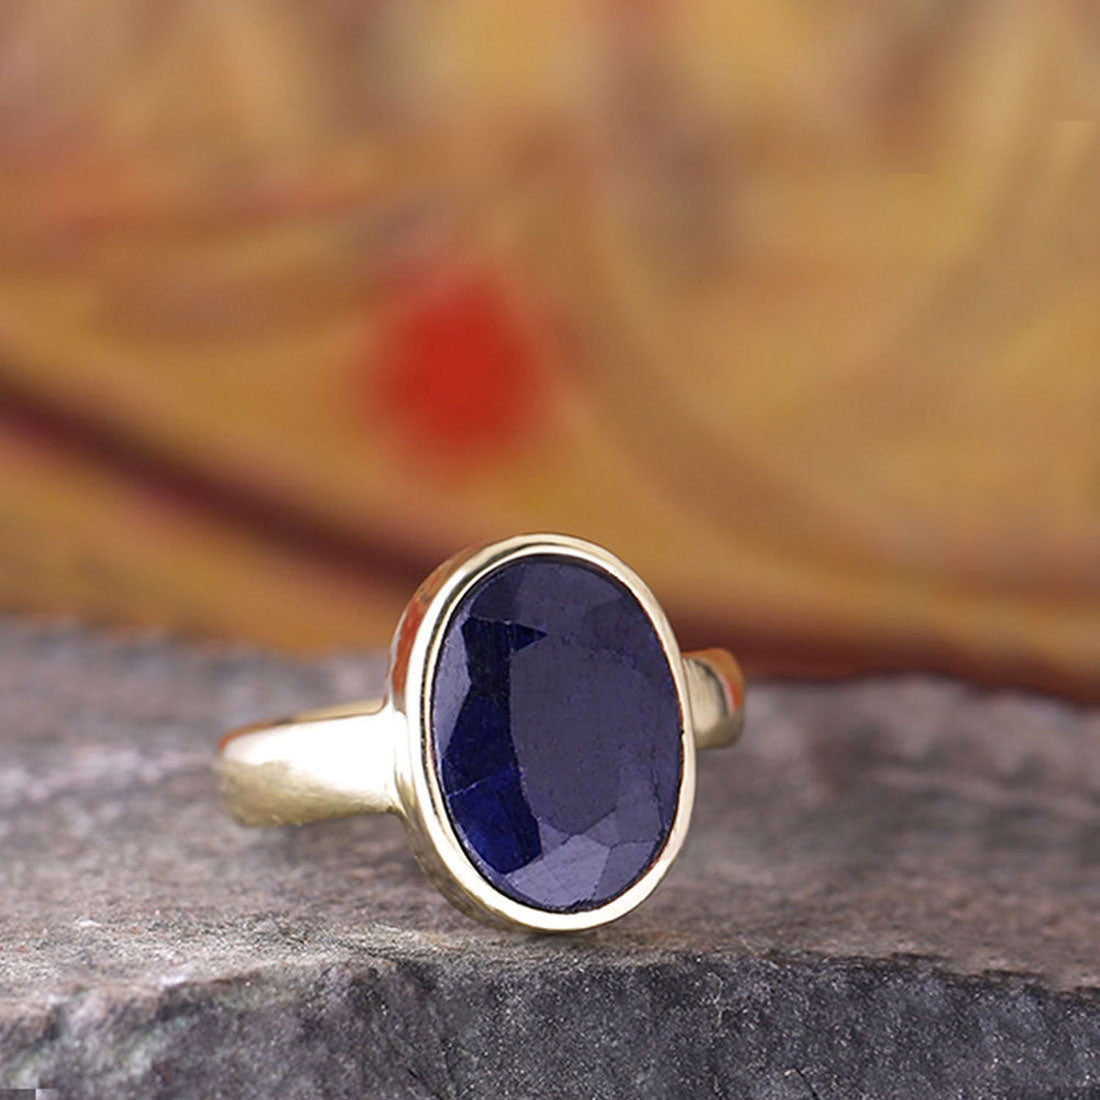 Buy OrixGems Store Beautiful AAA+++ Neelam Stone Original Certified 6.25  Ratti Ring Kashmiri Neela Pukhraj|Indra Neelam Stone Ring 6.61 Ratti Blue  Sapphire Ring for Men & Women नीलम रत्न ओरिजिनल रिंग at